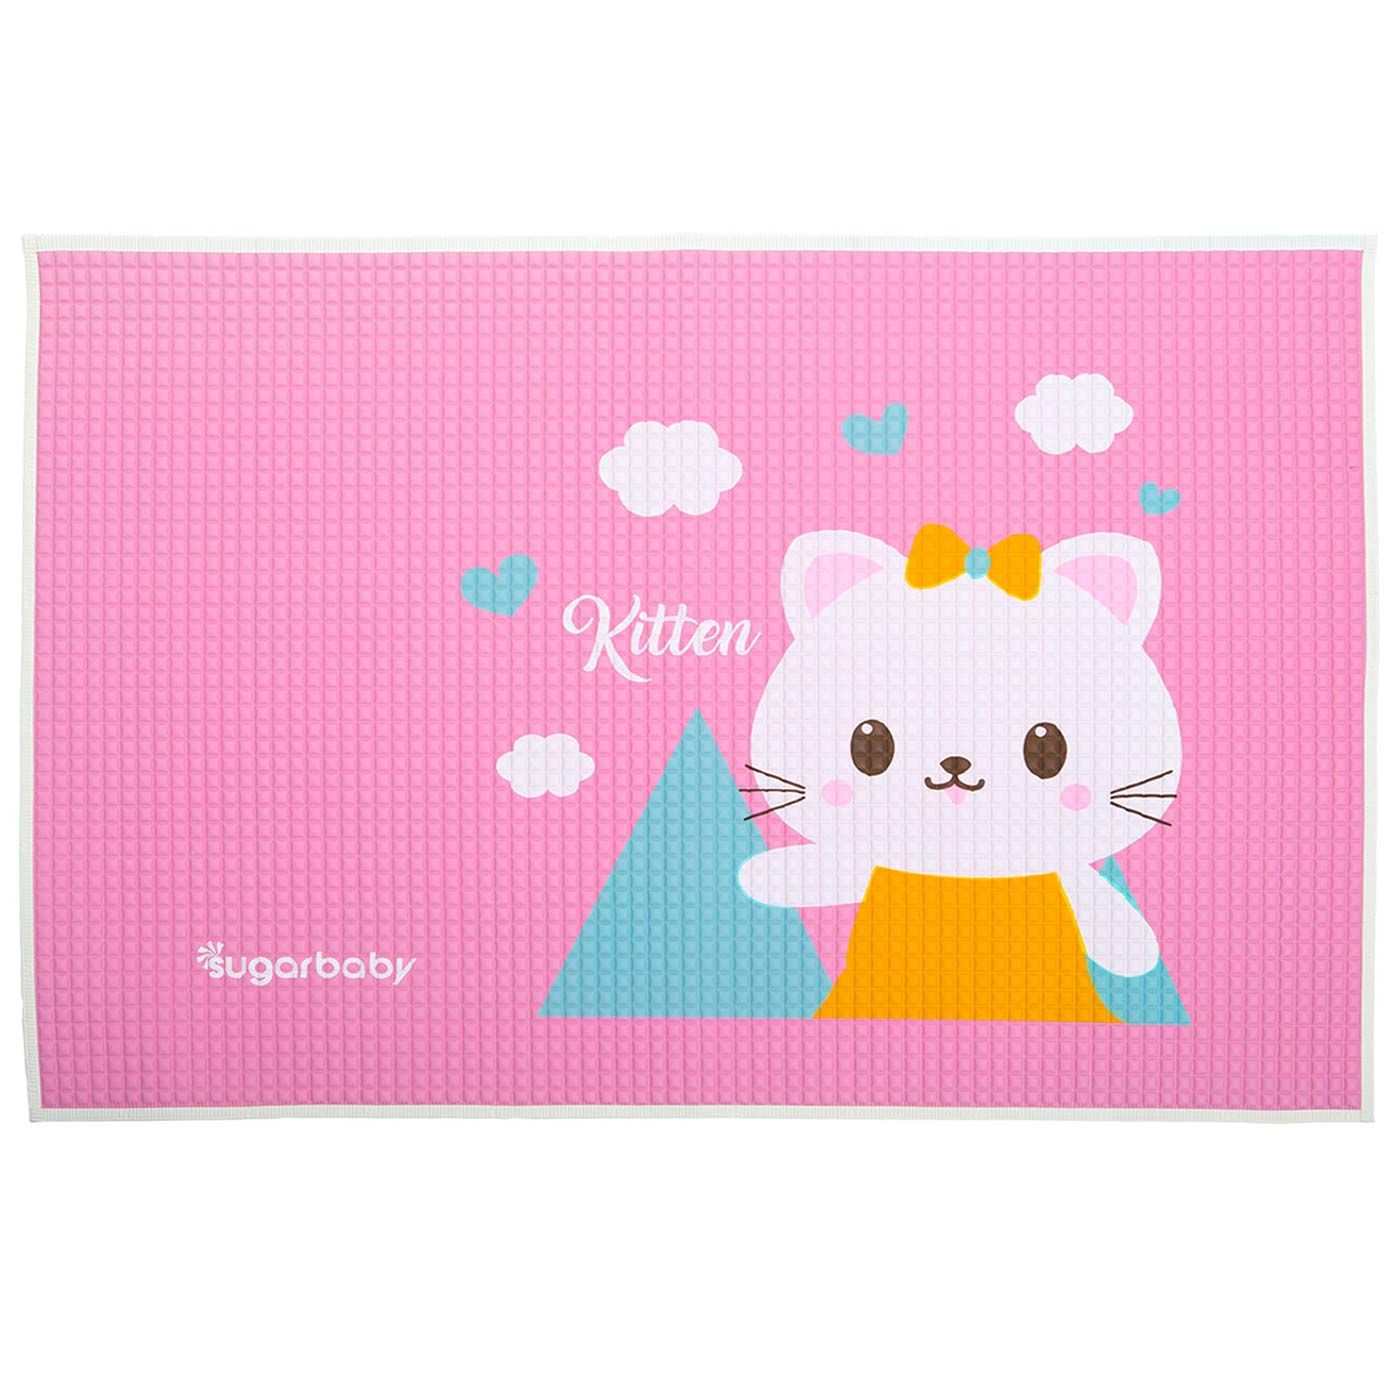 Sugar Baby Premium Air Filled Rubber Cot Sheet Pink Kitten - 1